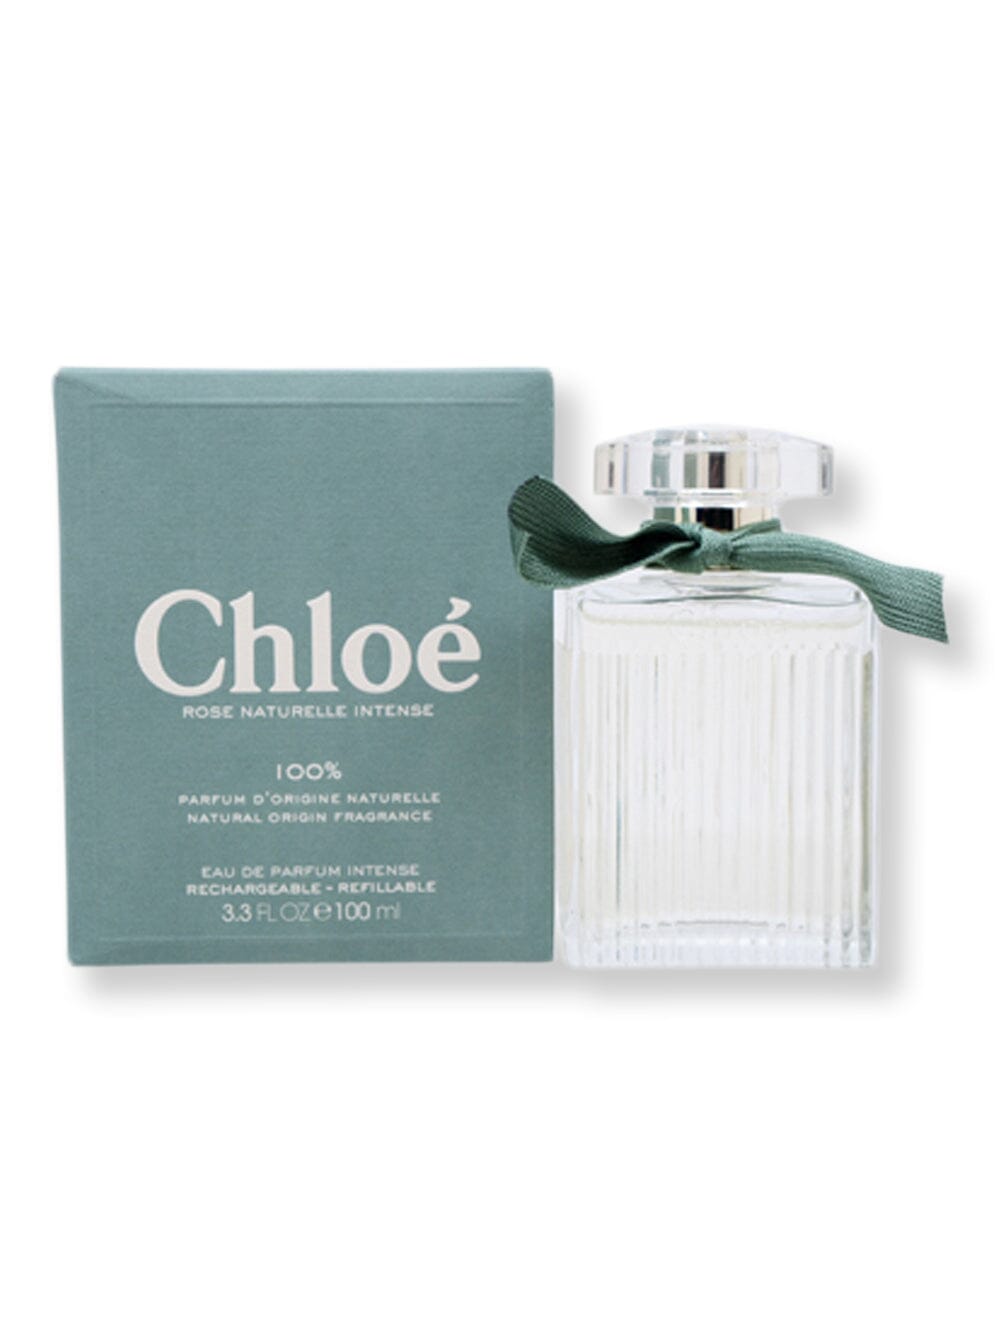 Chloe Chloe Rose Naturelle Intense EDP Spray Refillable Intense 3.3 oz100 ml Perfume 